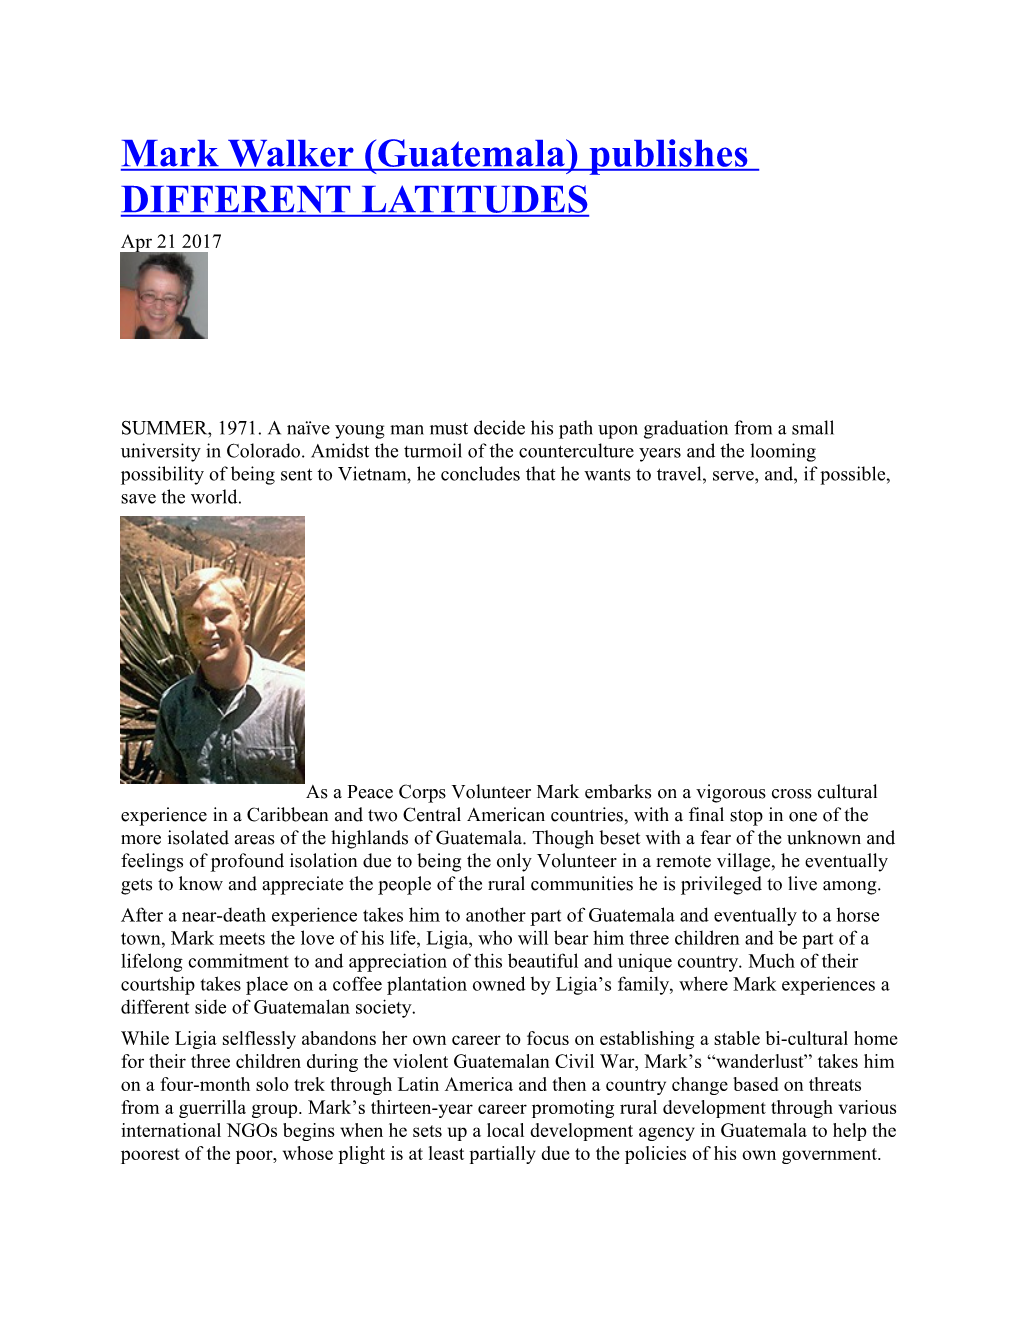 Mark Walker (Guatemala) Publishes DIFFERENT LATITUDES